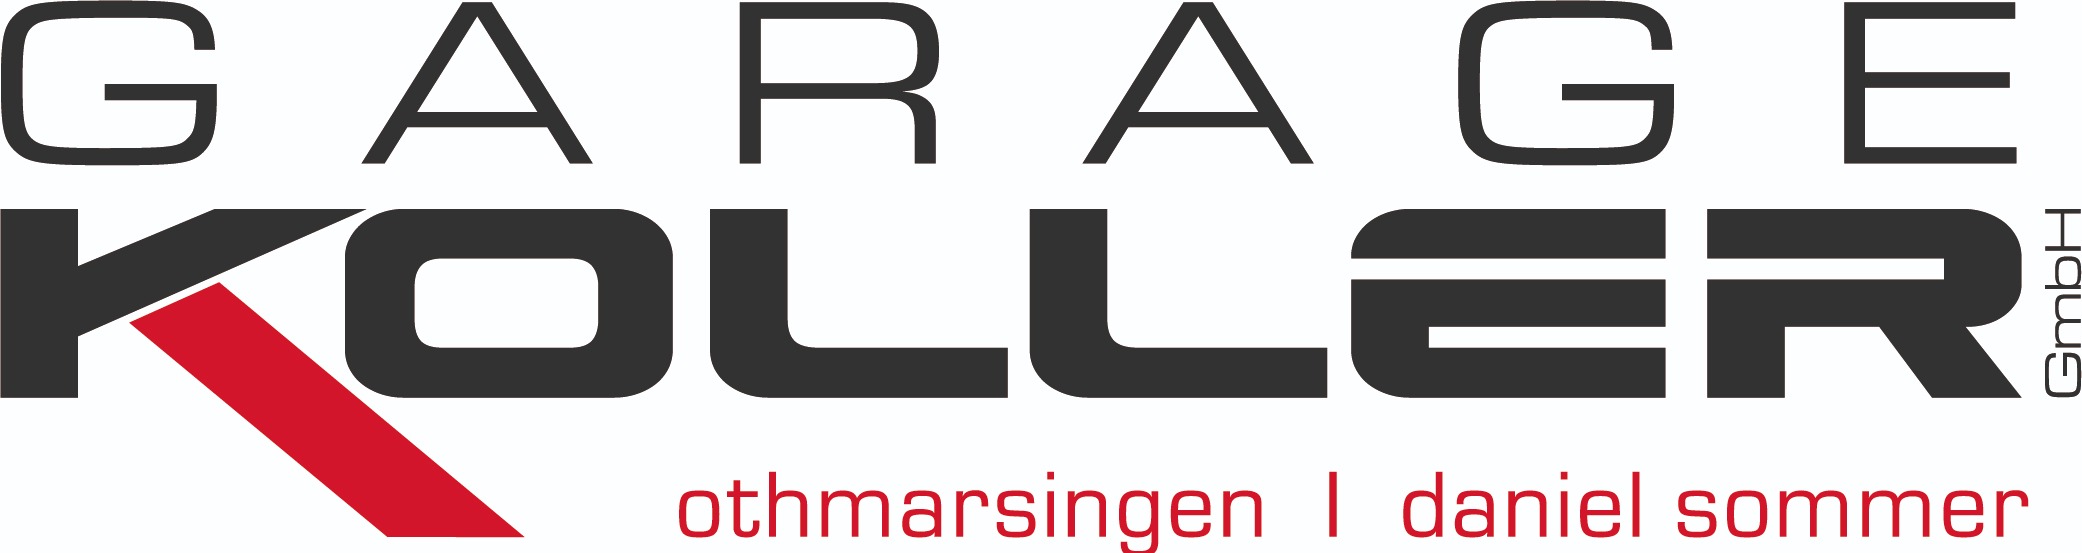 Garage Koller GmbH, Othmarsingen